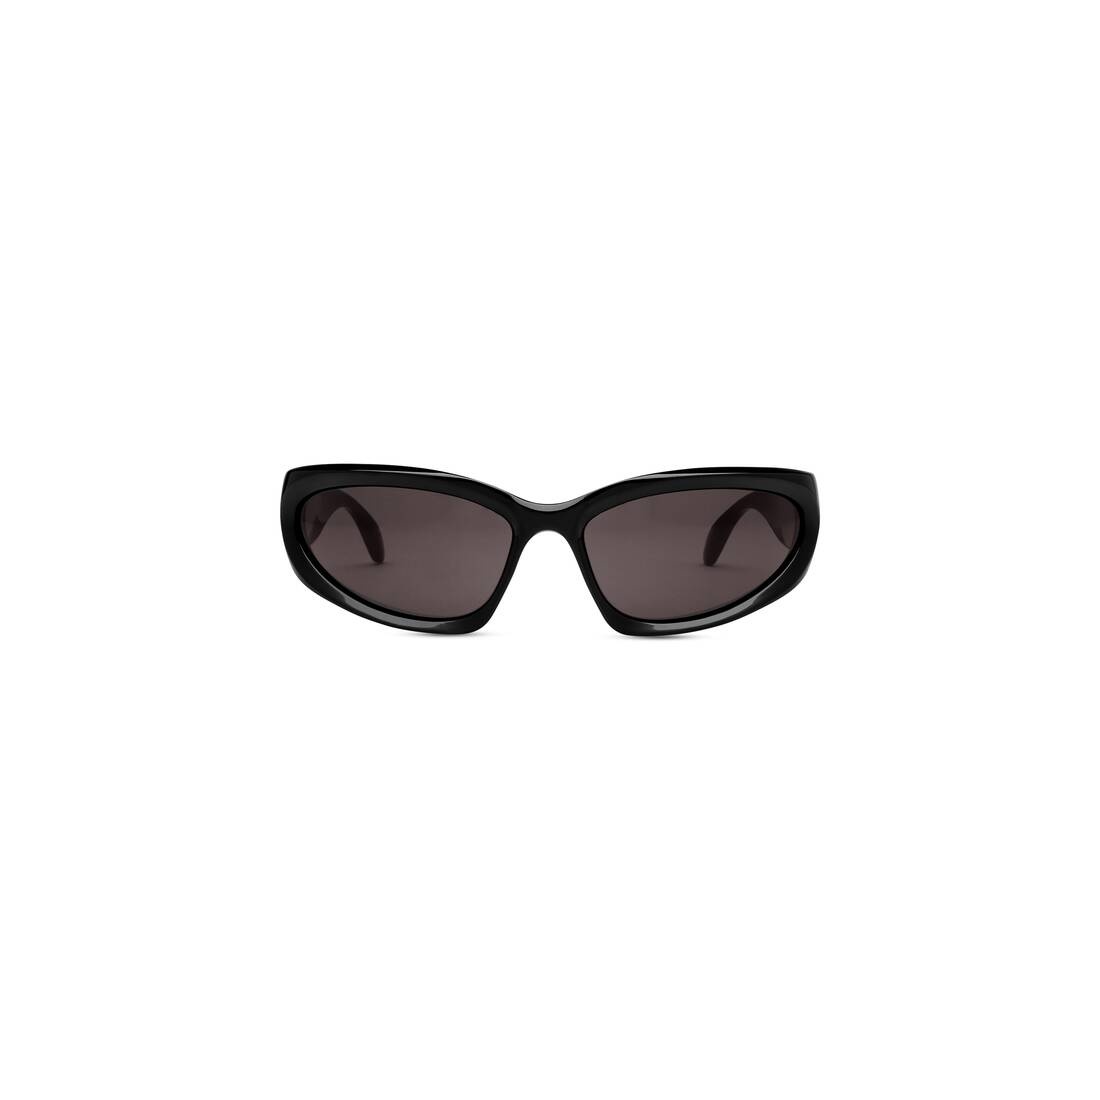 Swift Oval Sunglasses in Black - 1